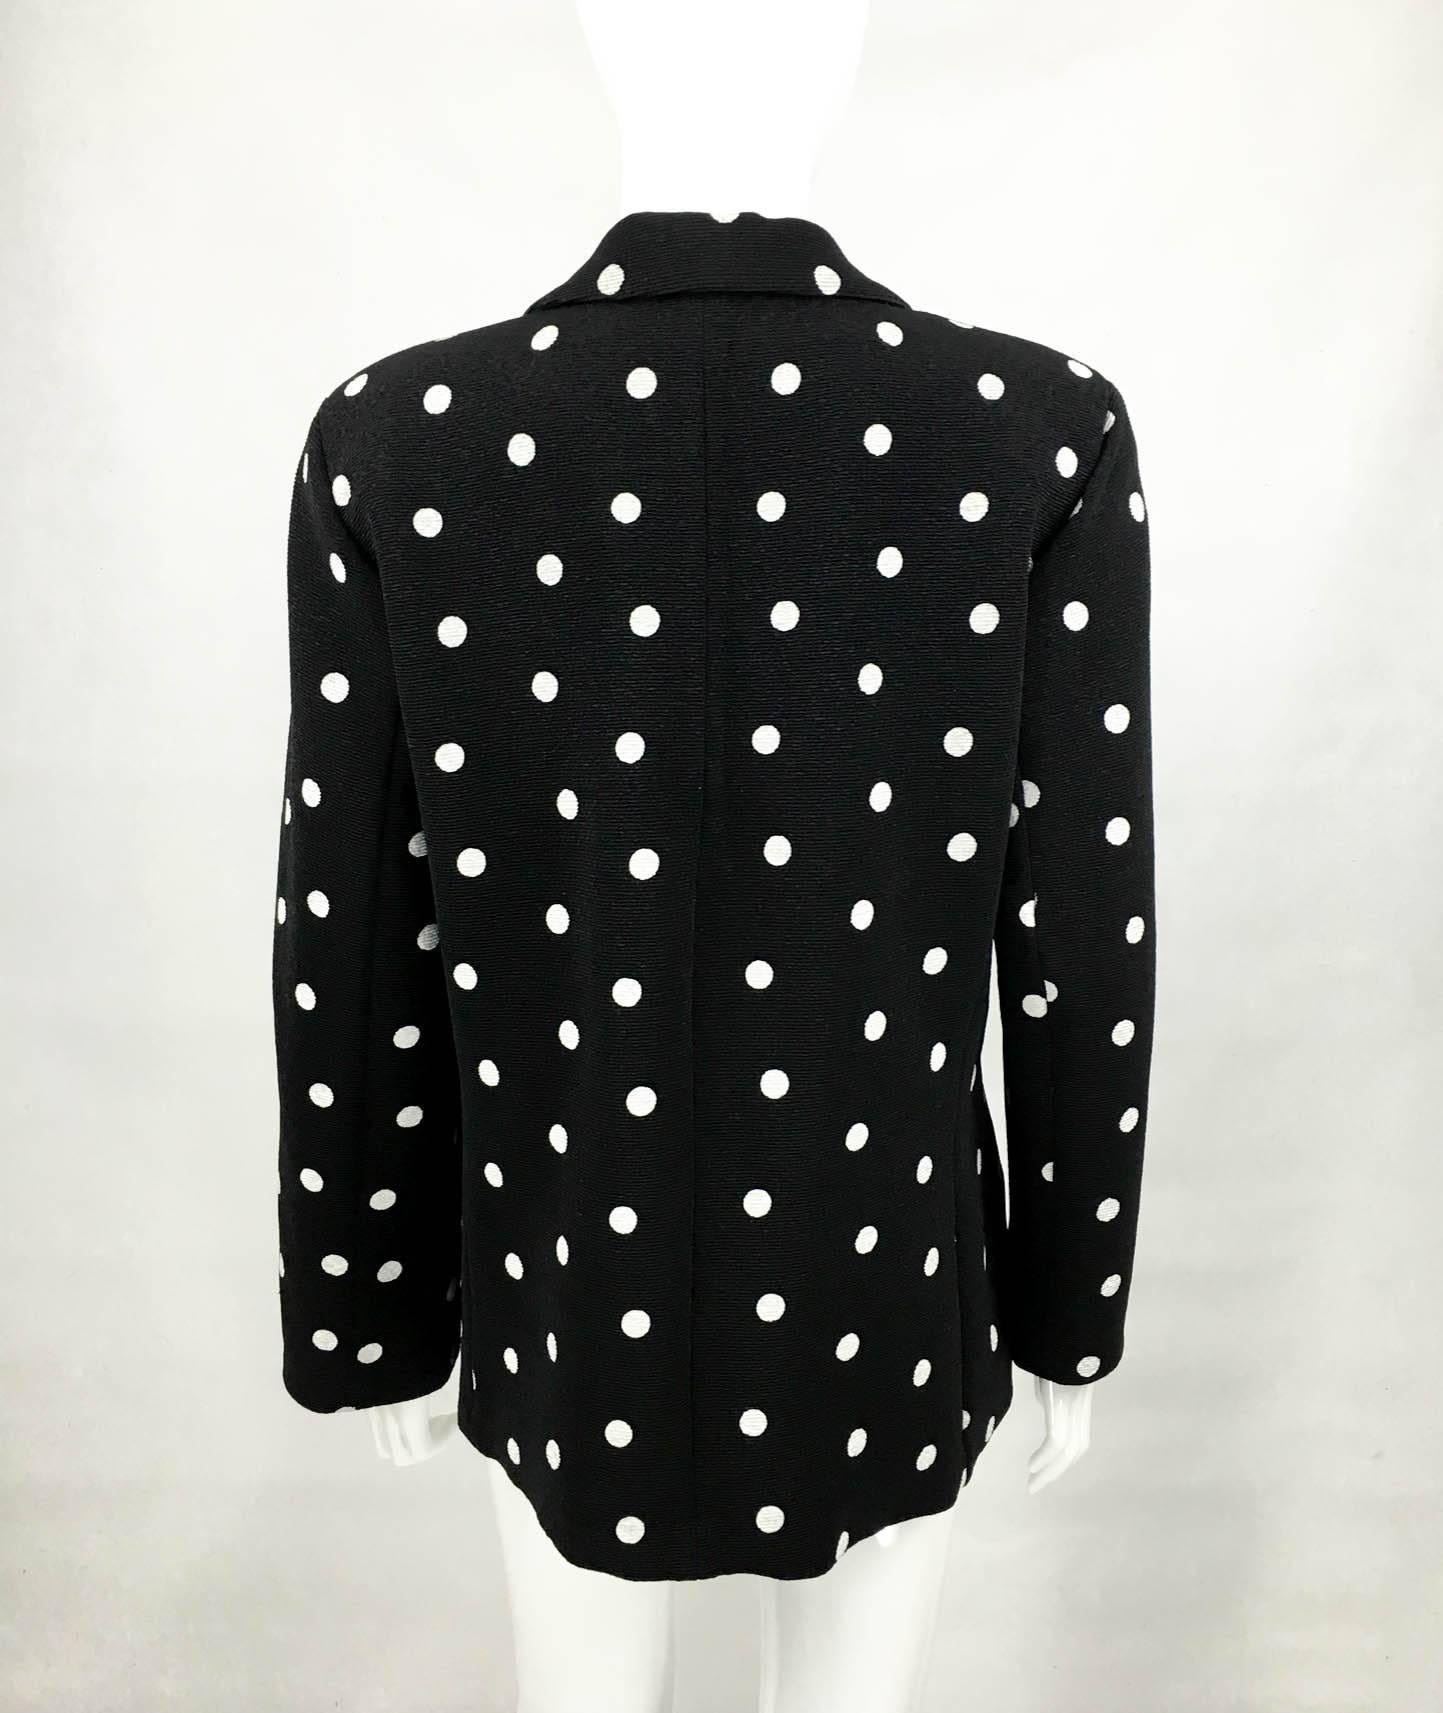 Balenciaga Black and White Polka Dot Blazer - 1980s 3